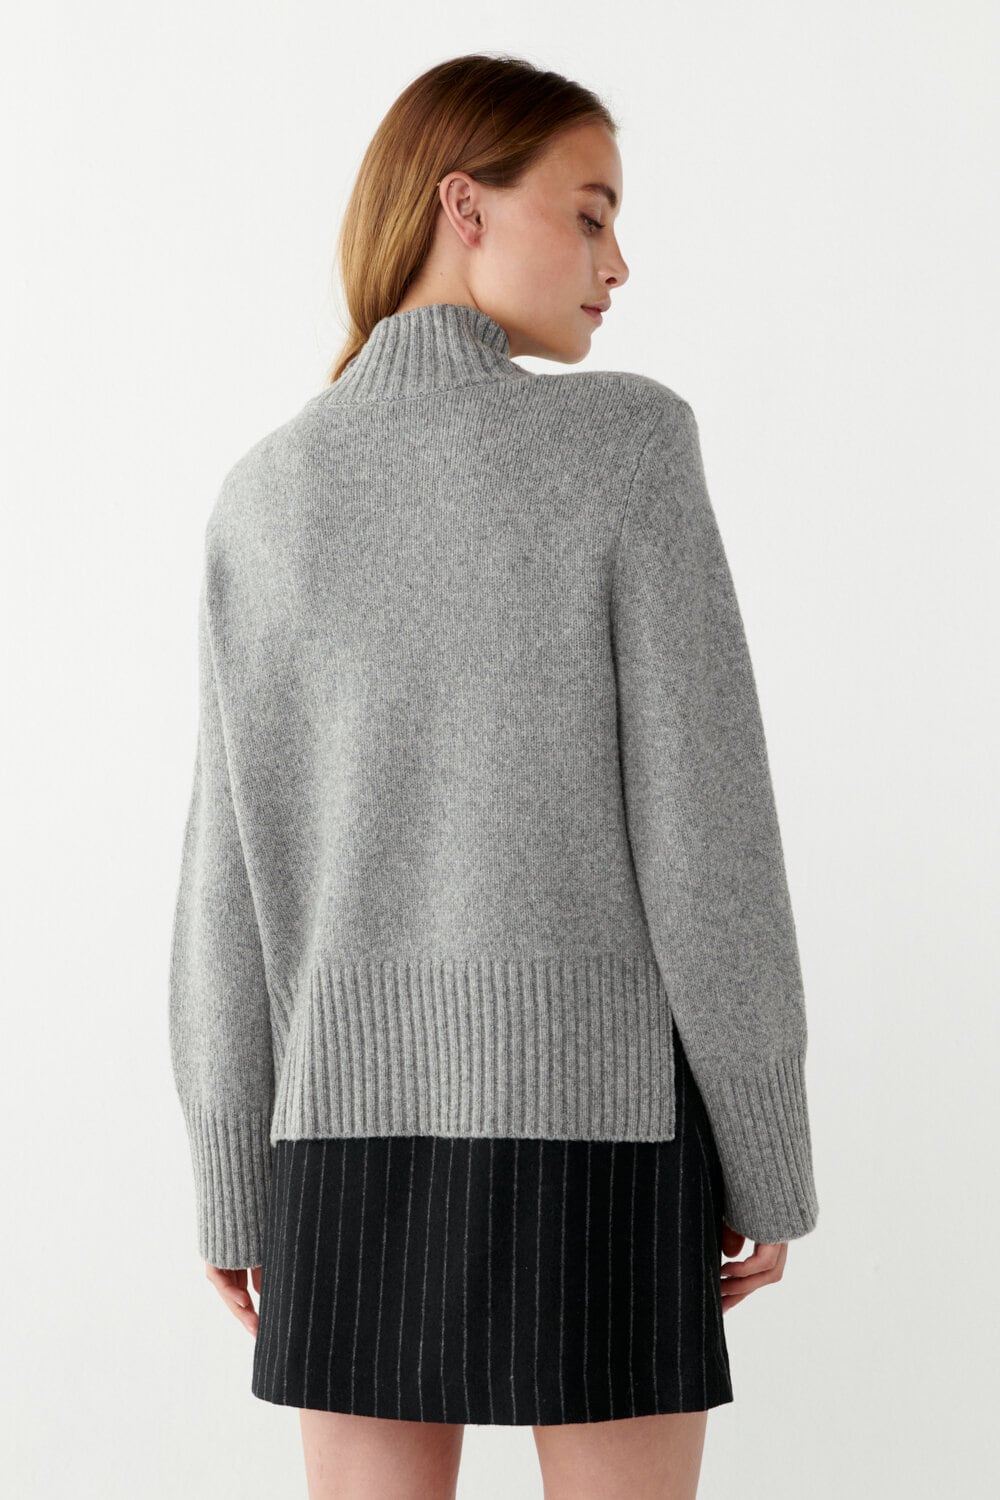 Deirdre Sweater